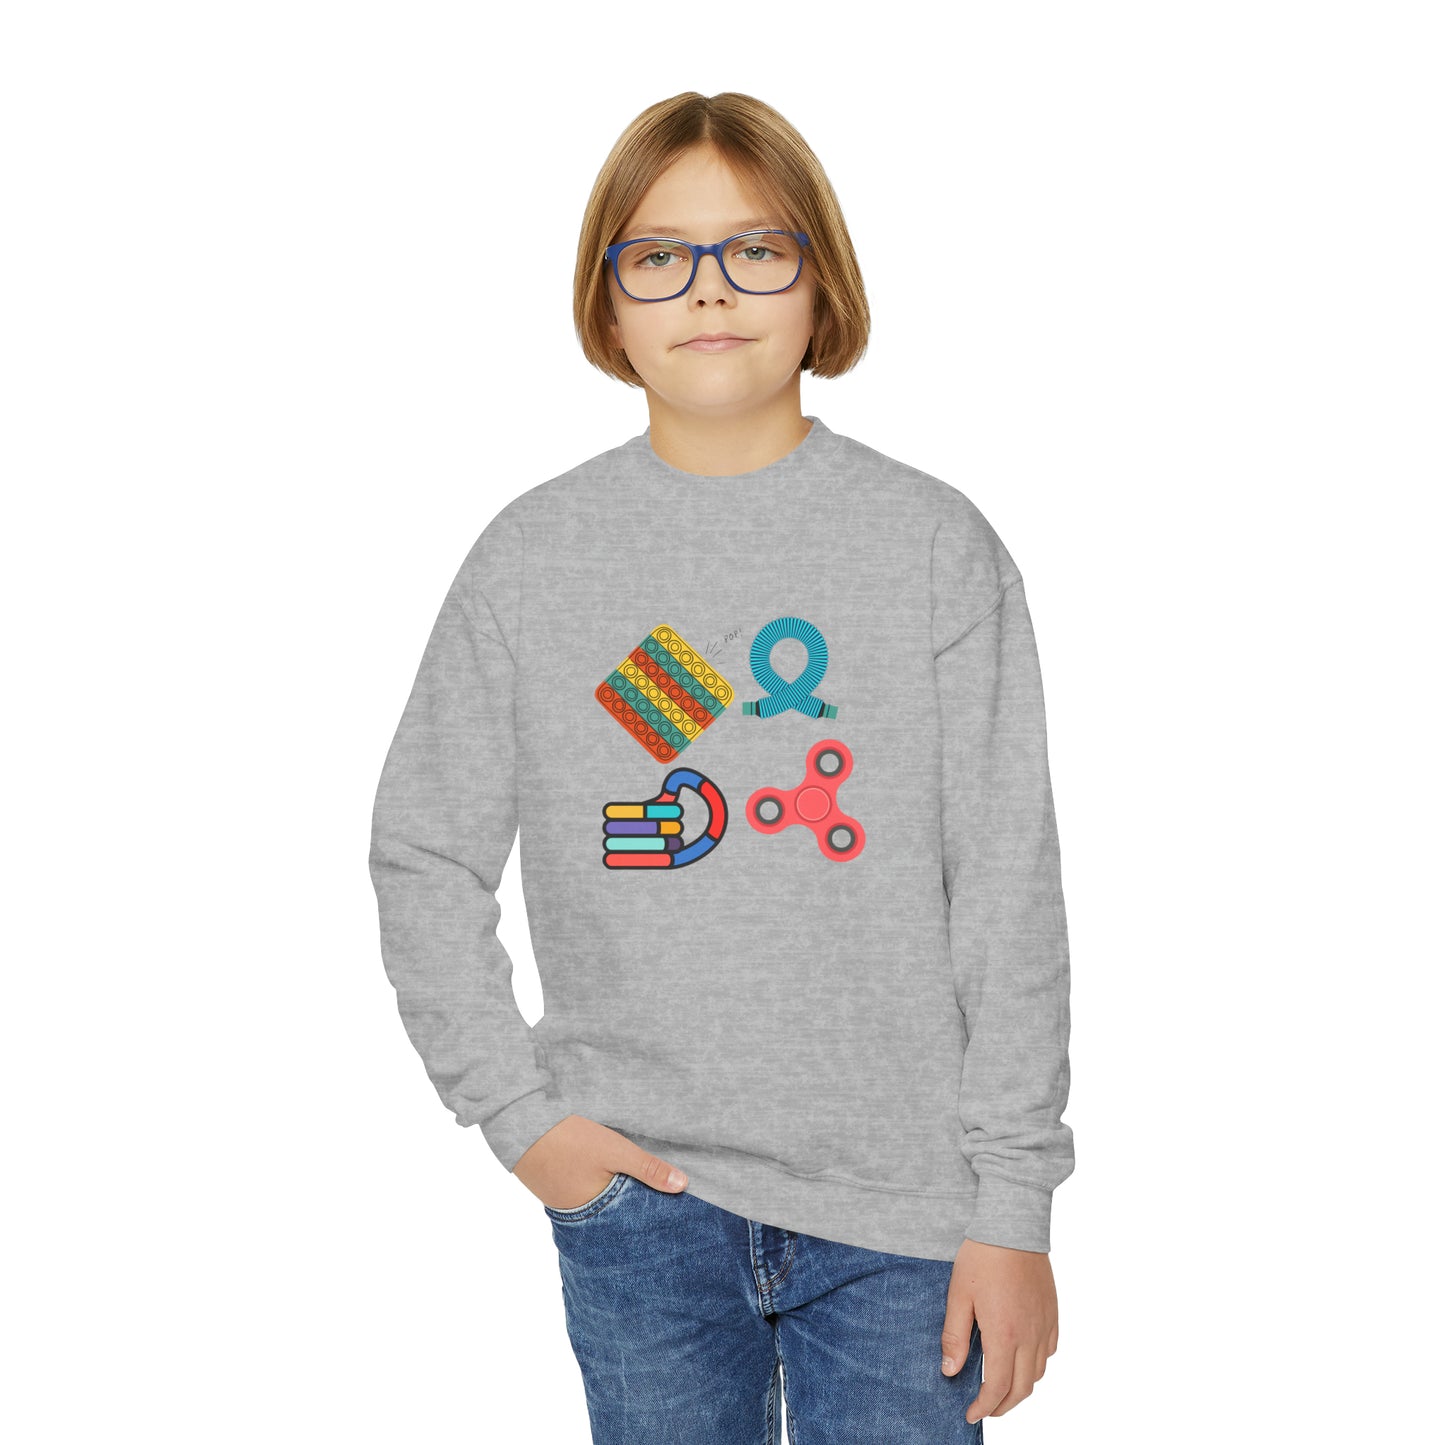 Sensory items: Youth Crewneck Sweatshirt